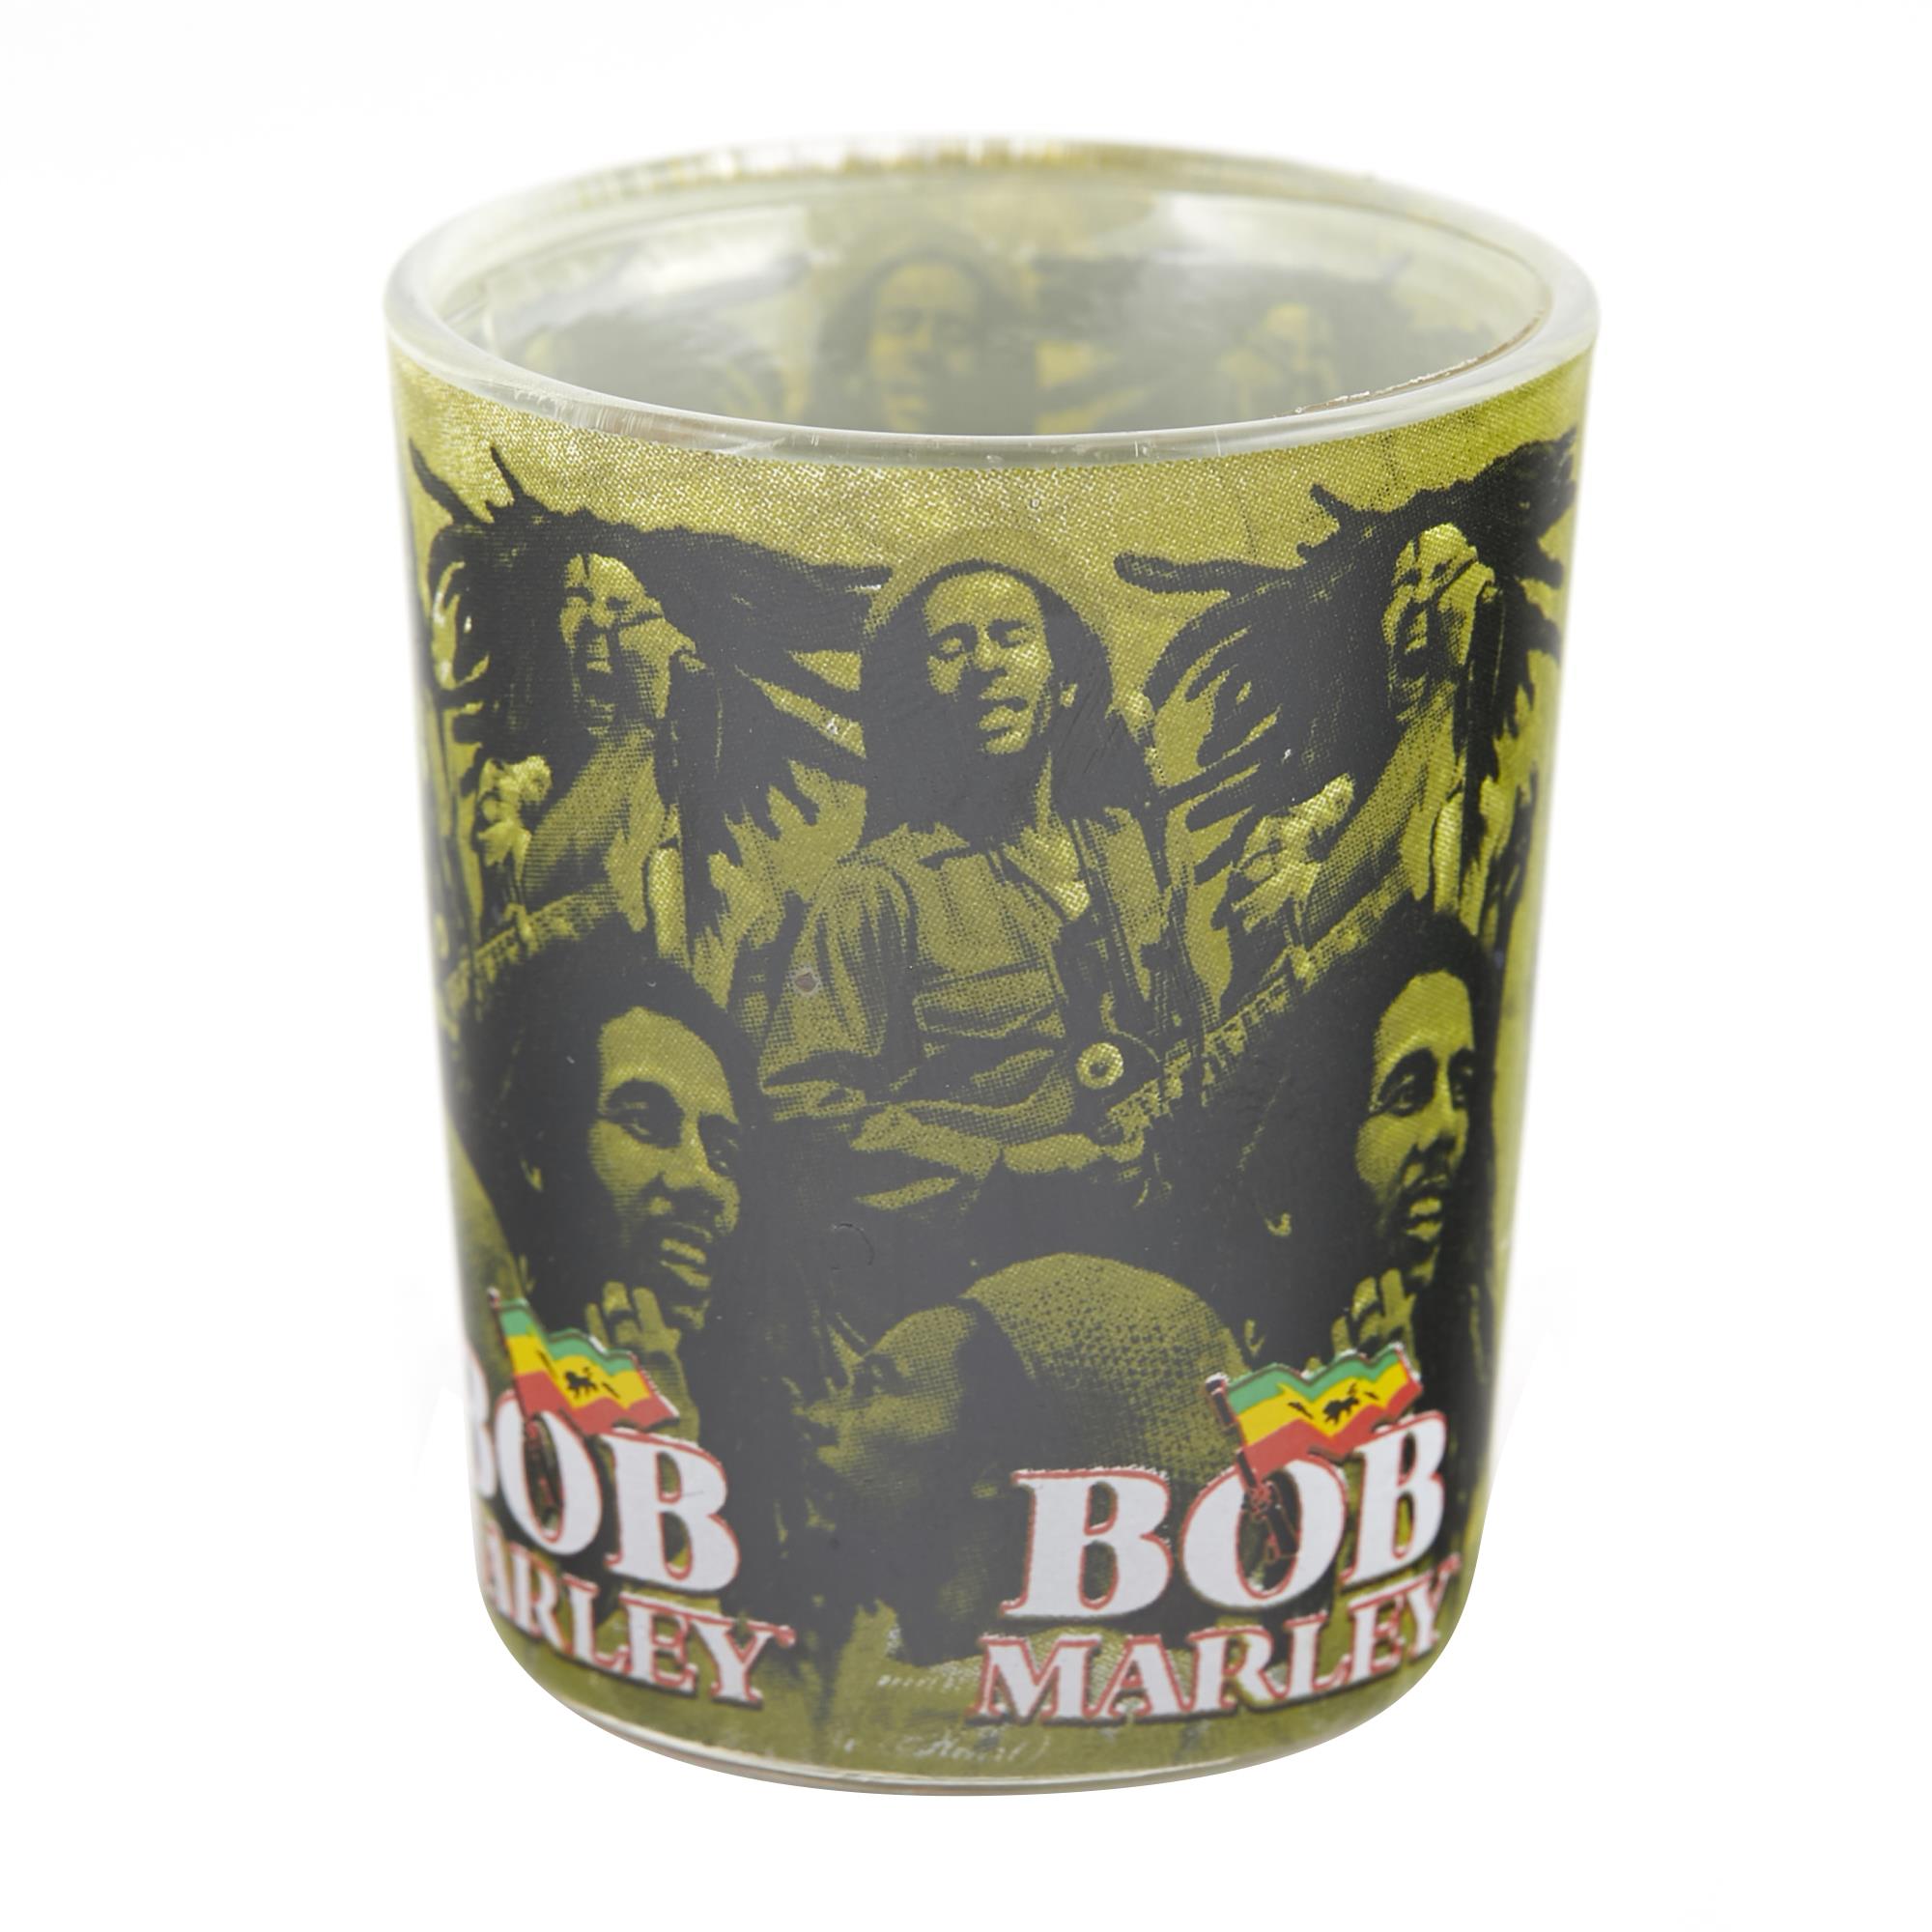 BOB MARLEY SHOTGLASS CANDLES